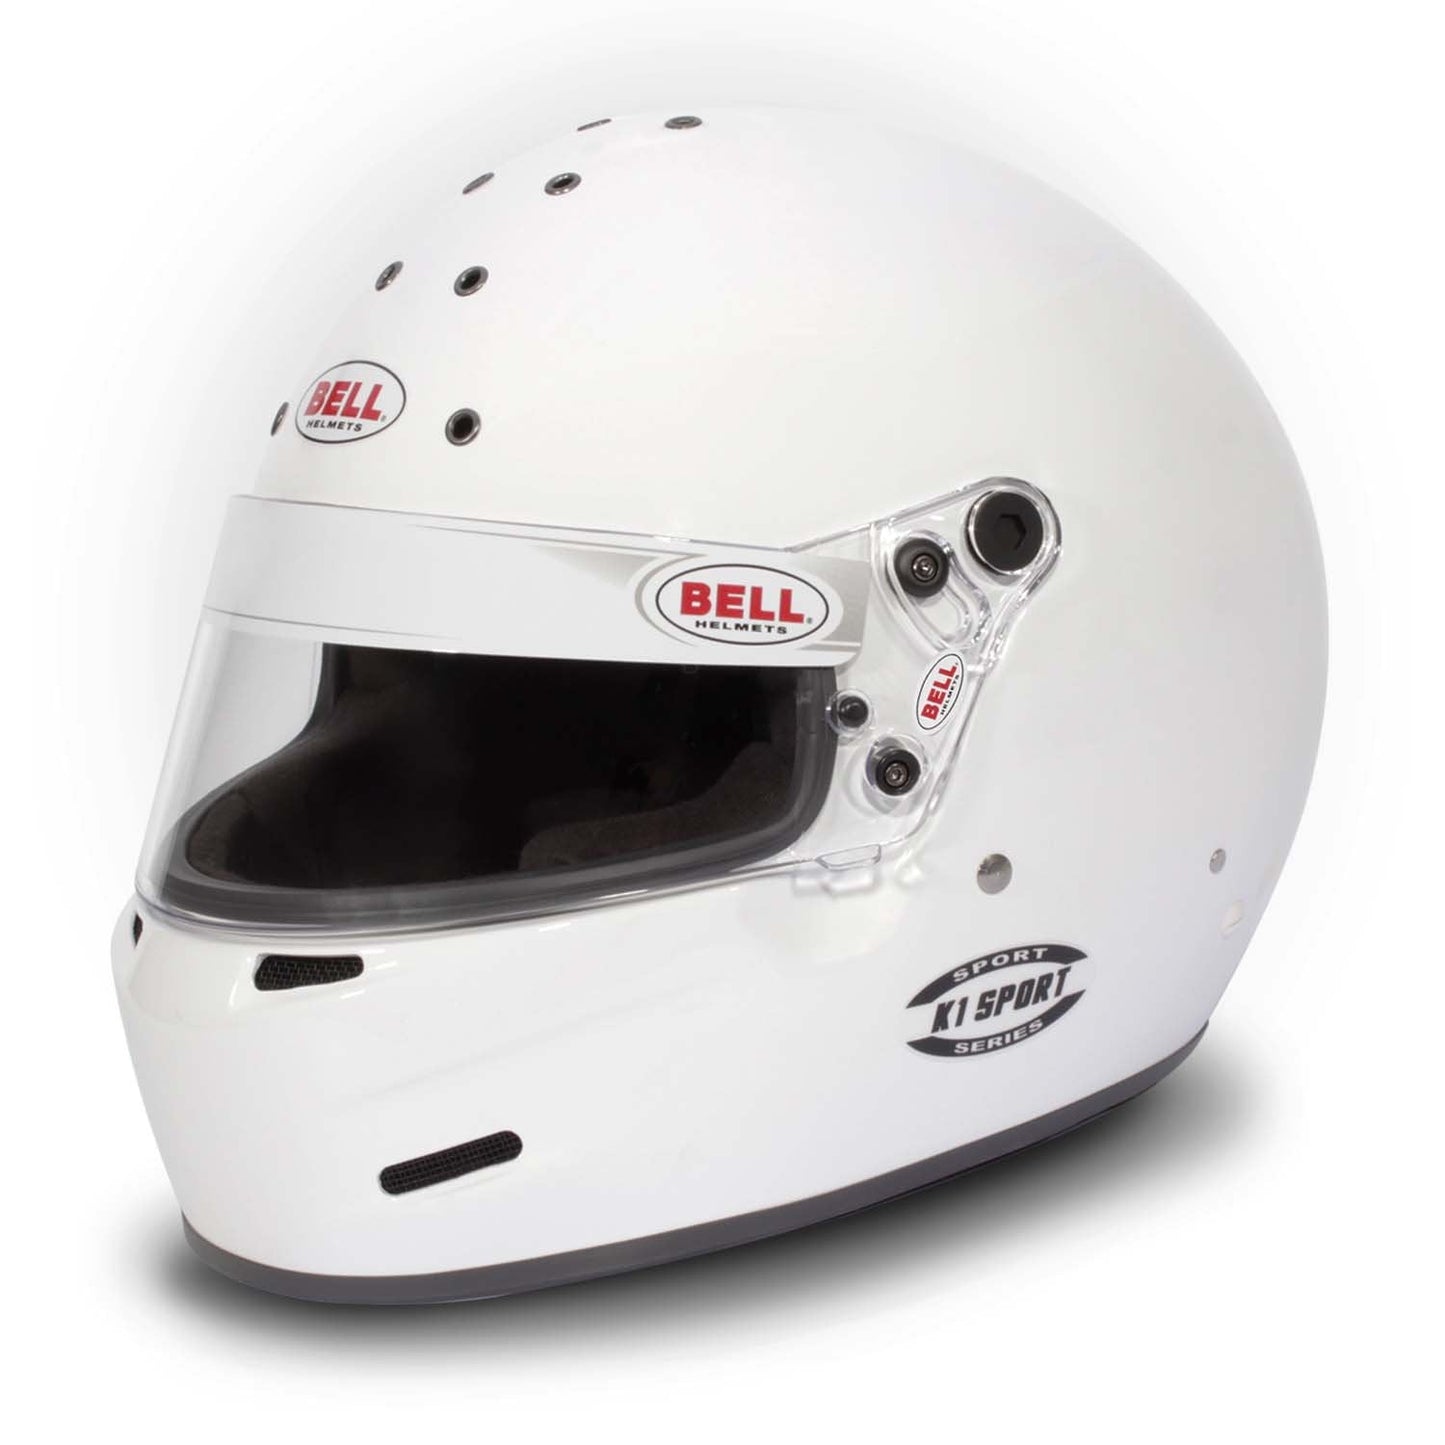 Bell K.1 Sport SA2020 Helmet